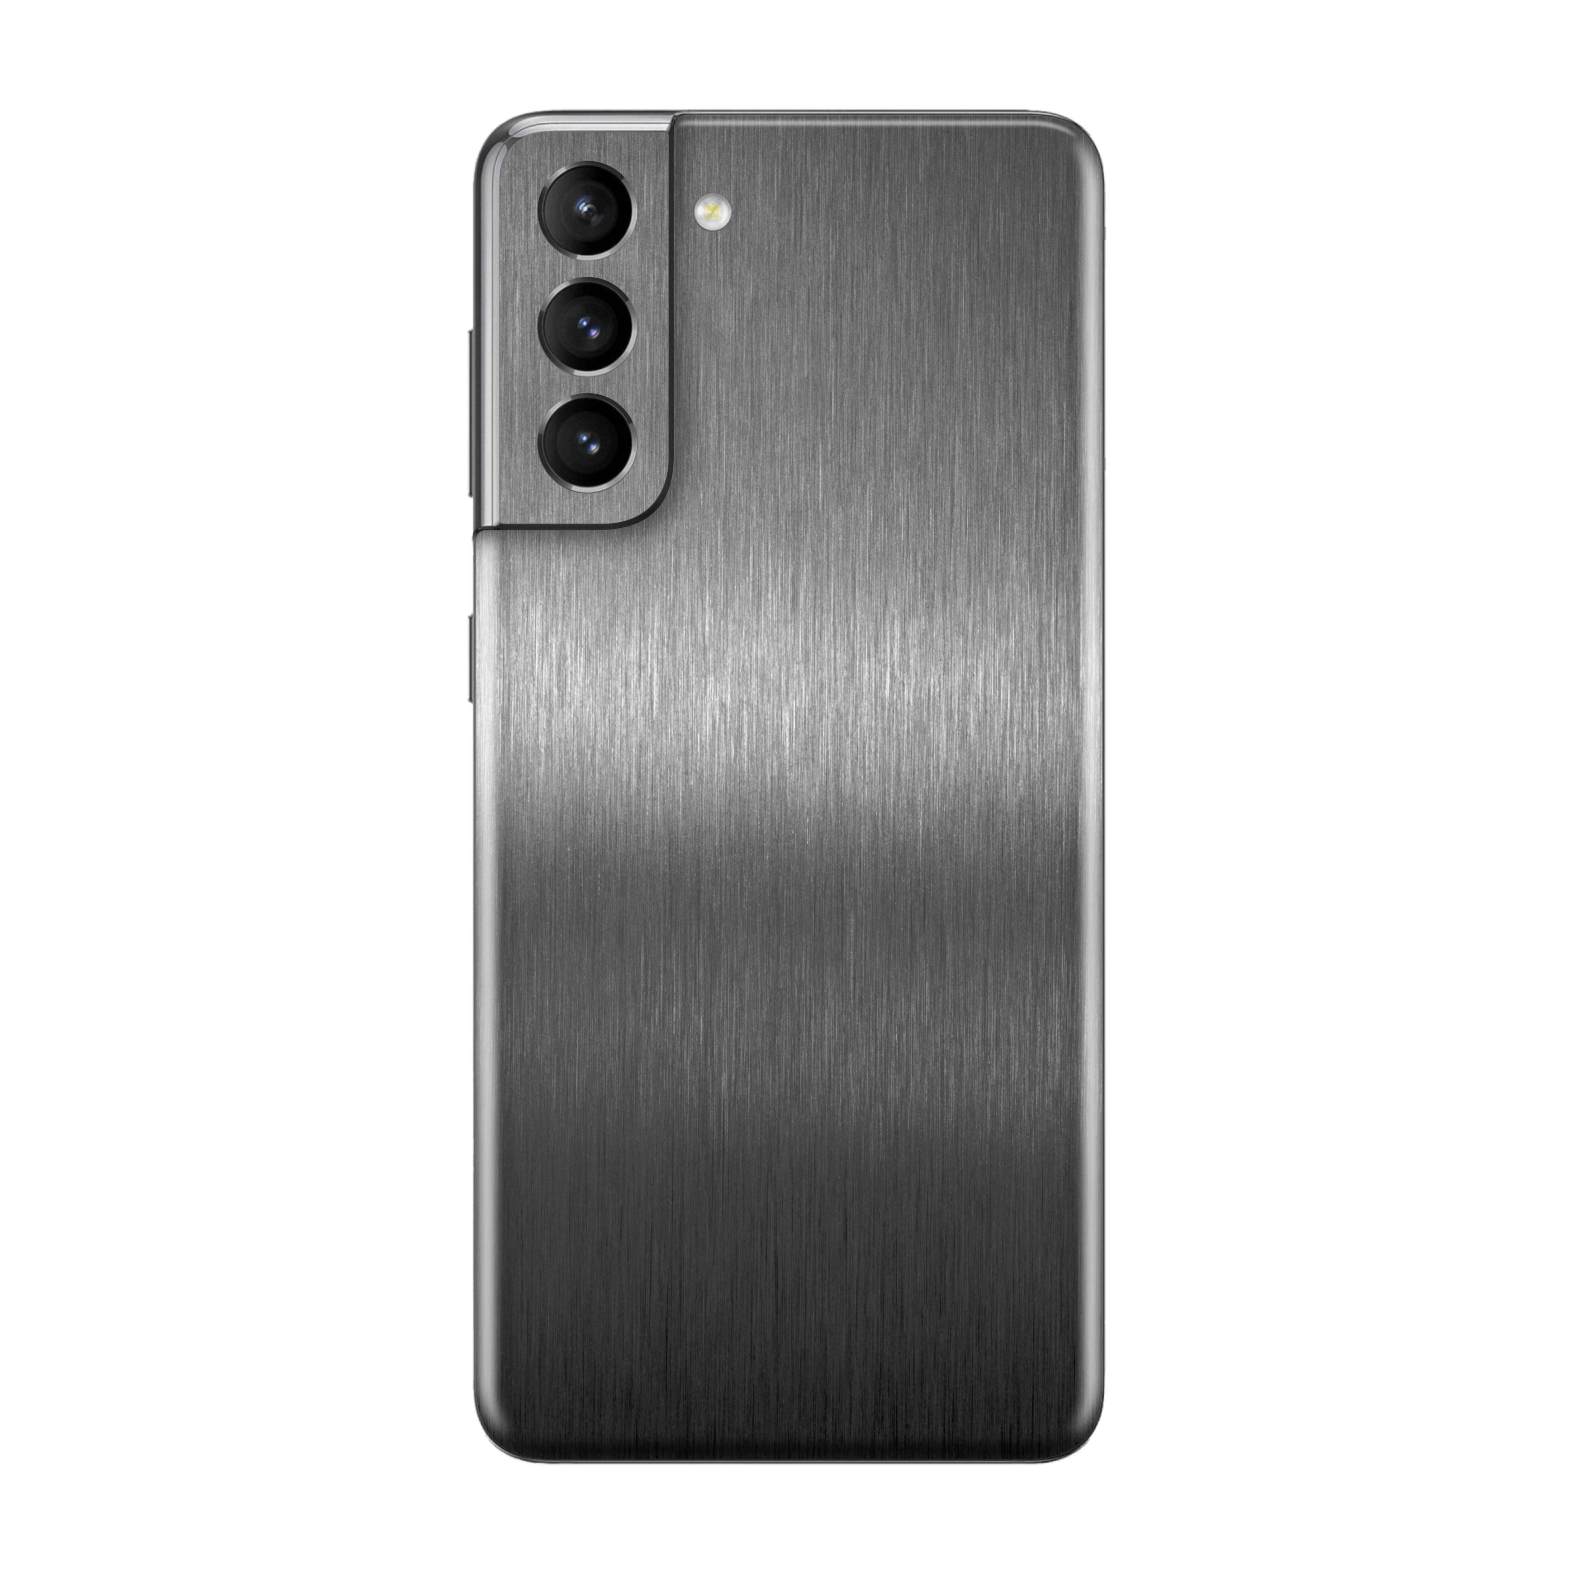 Samsung Galaxy S21 Brushed Metal Titanium Metallic Skin Wrap Sticker Decal Cover Protector by EasySkinz | EasySkinz.com